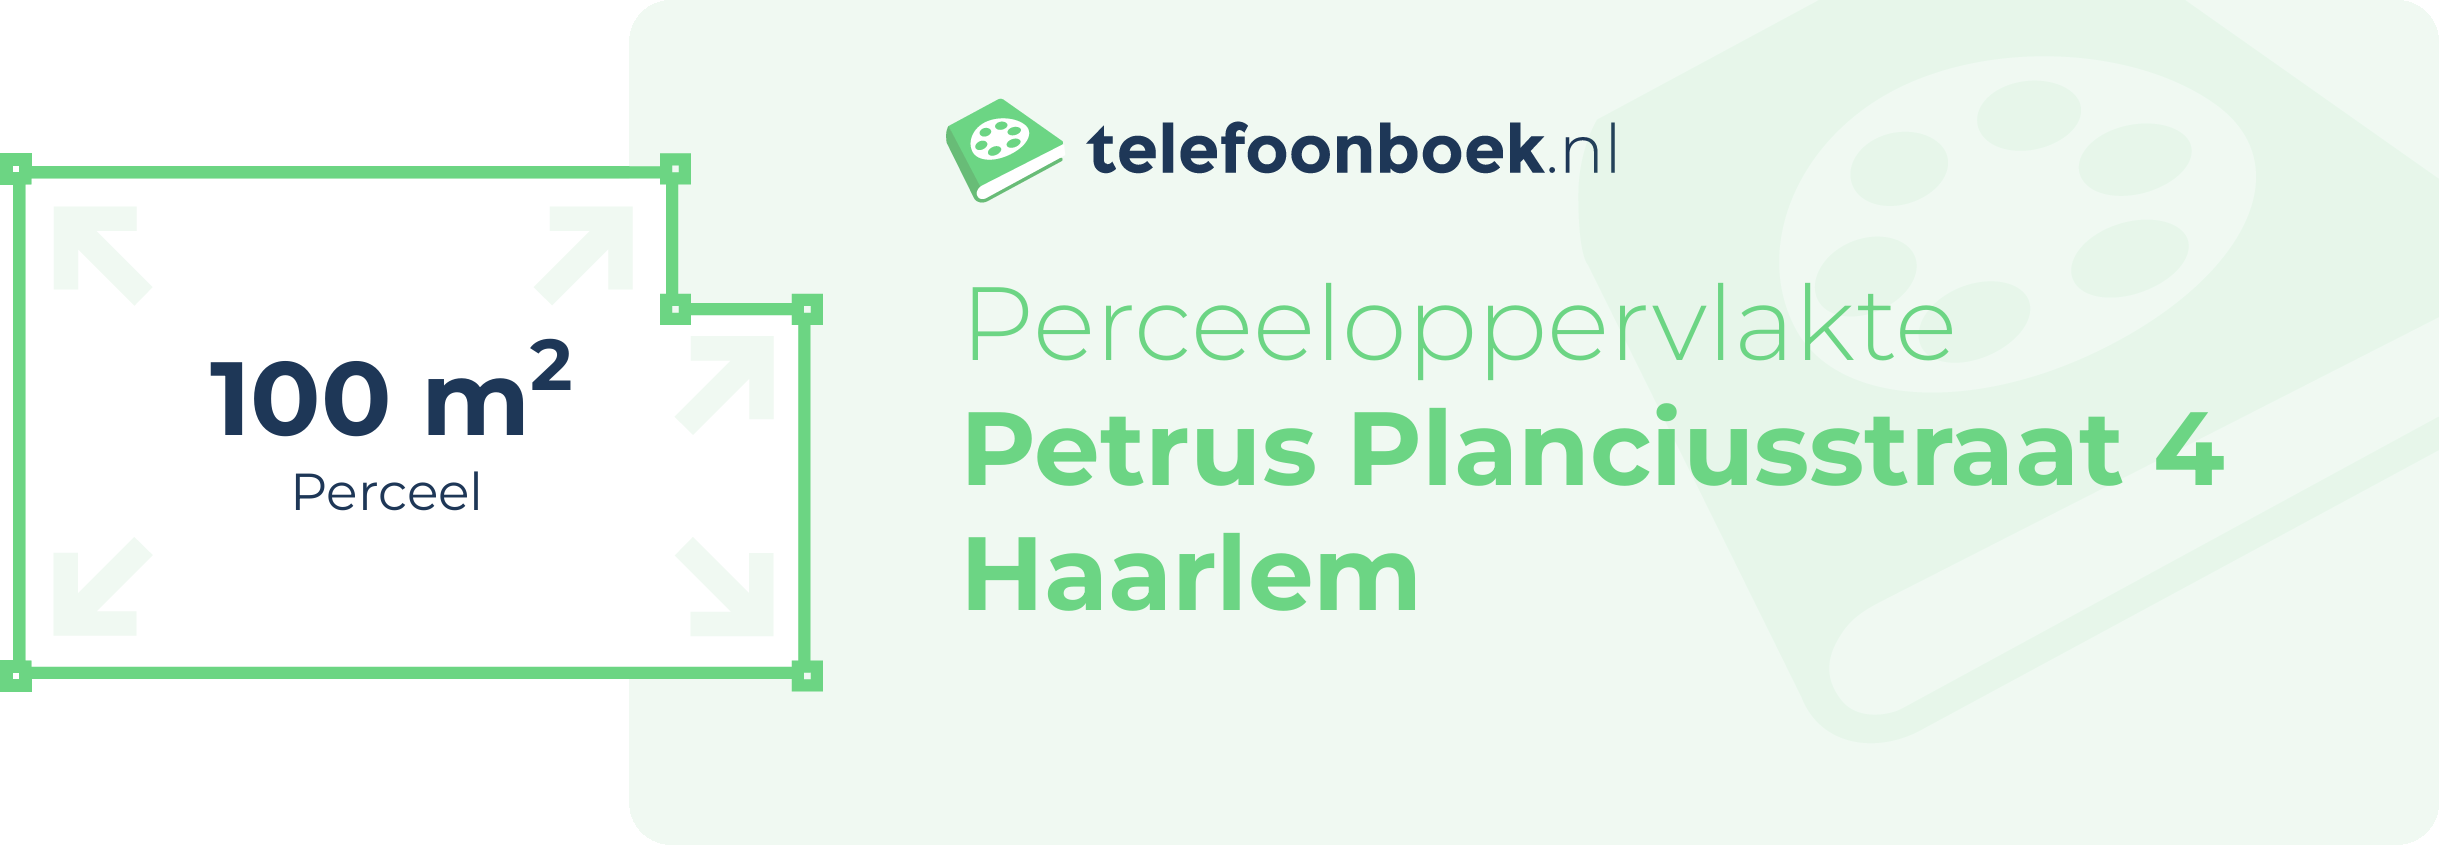 Perceeloppervlakte Petrus Planciusstraat 4 Haarlem